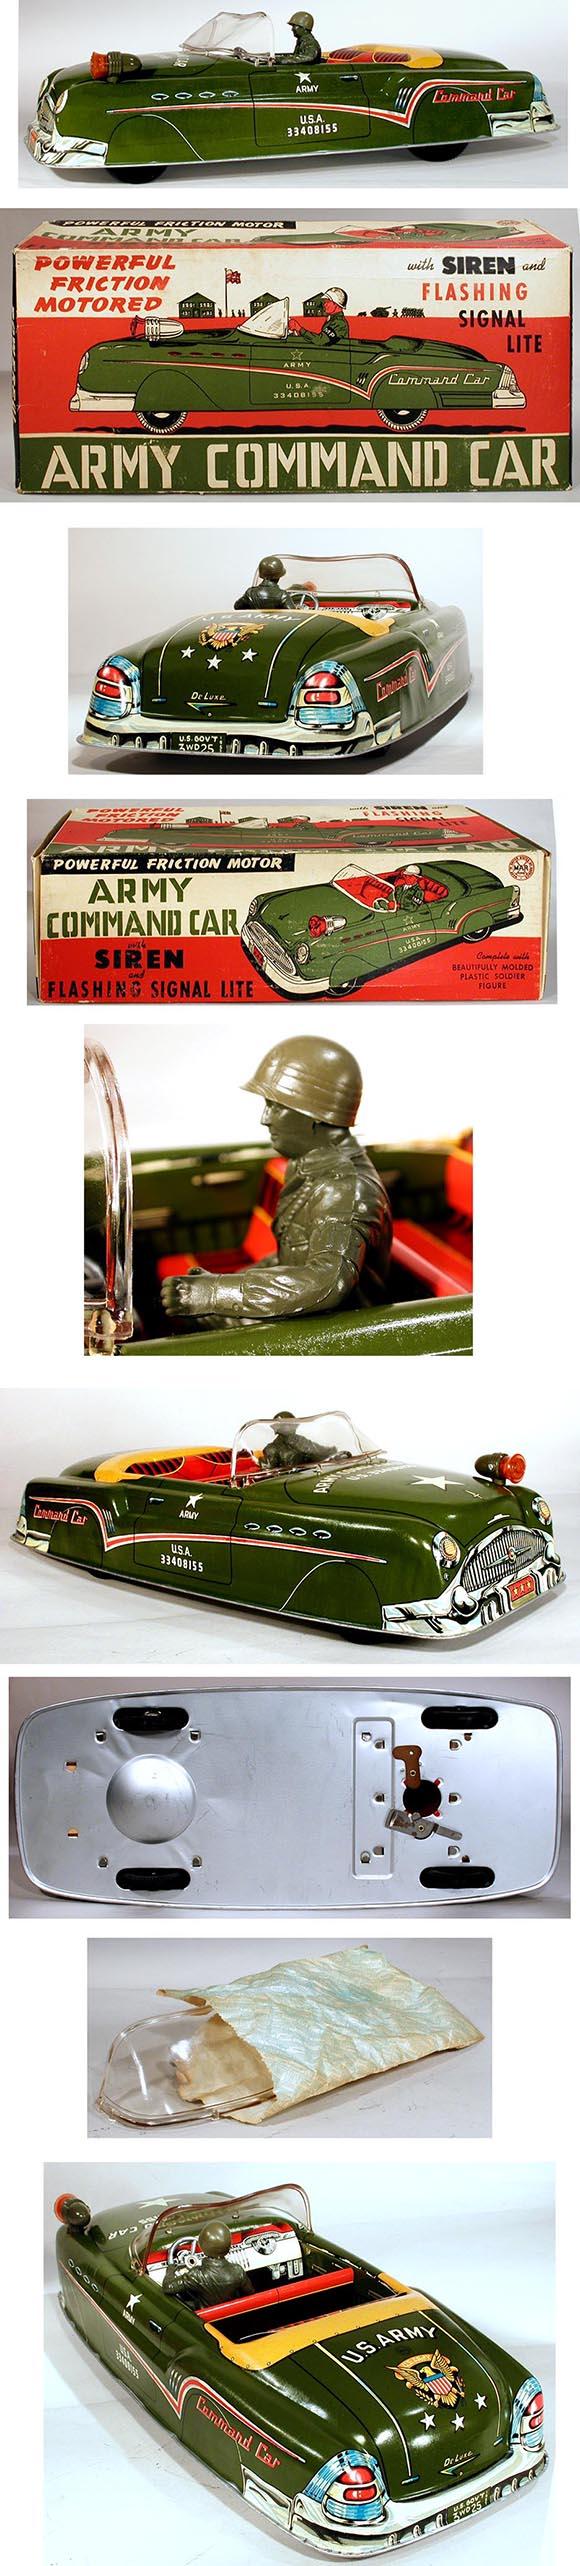 1957 Marx, Army Command Car with Siren & Flashing Signal Light in Original Box